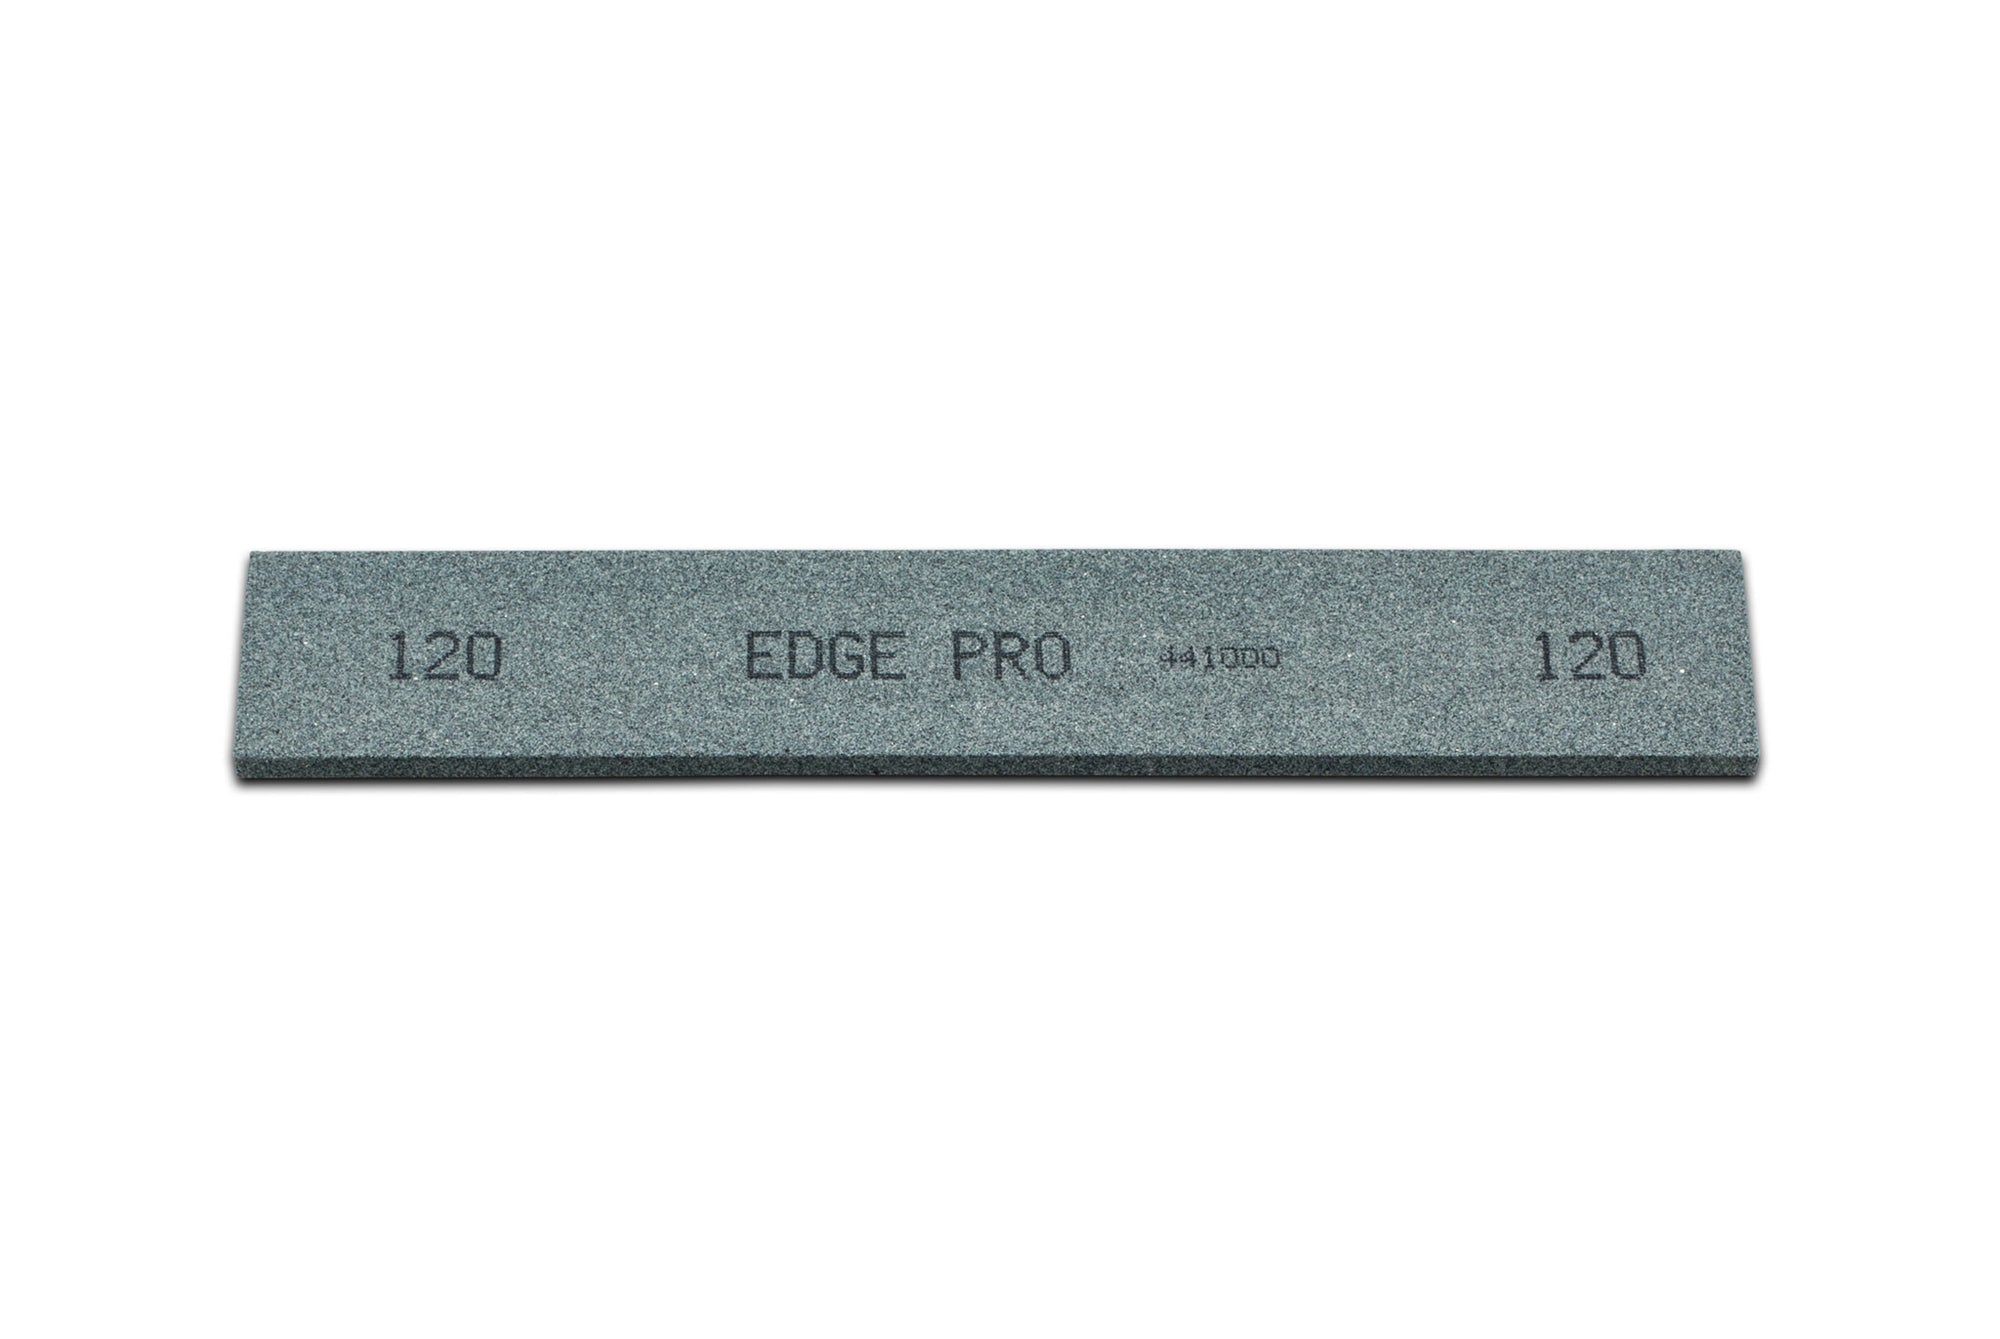 Edge Pro Unmounted Stone 120 grit Canada